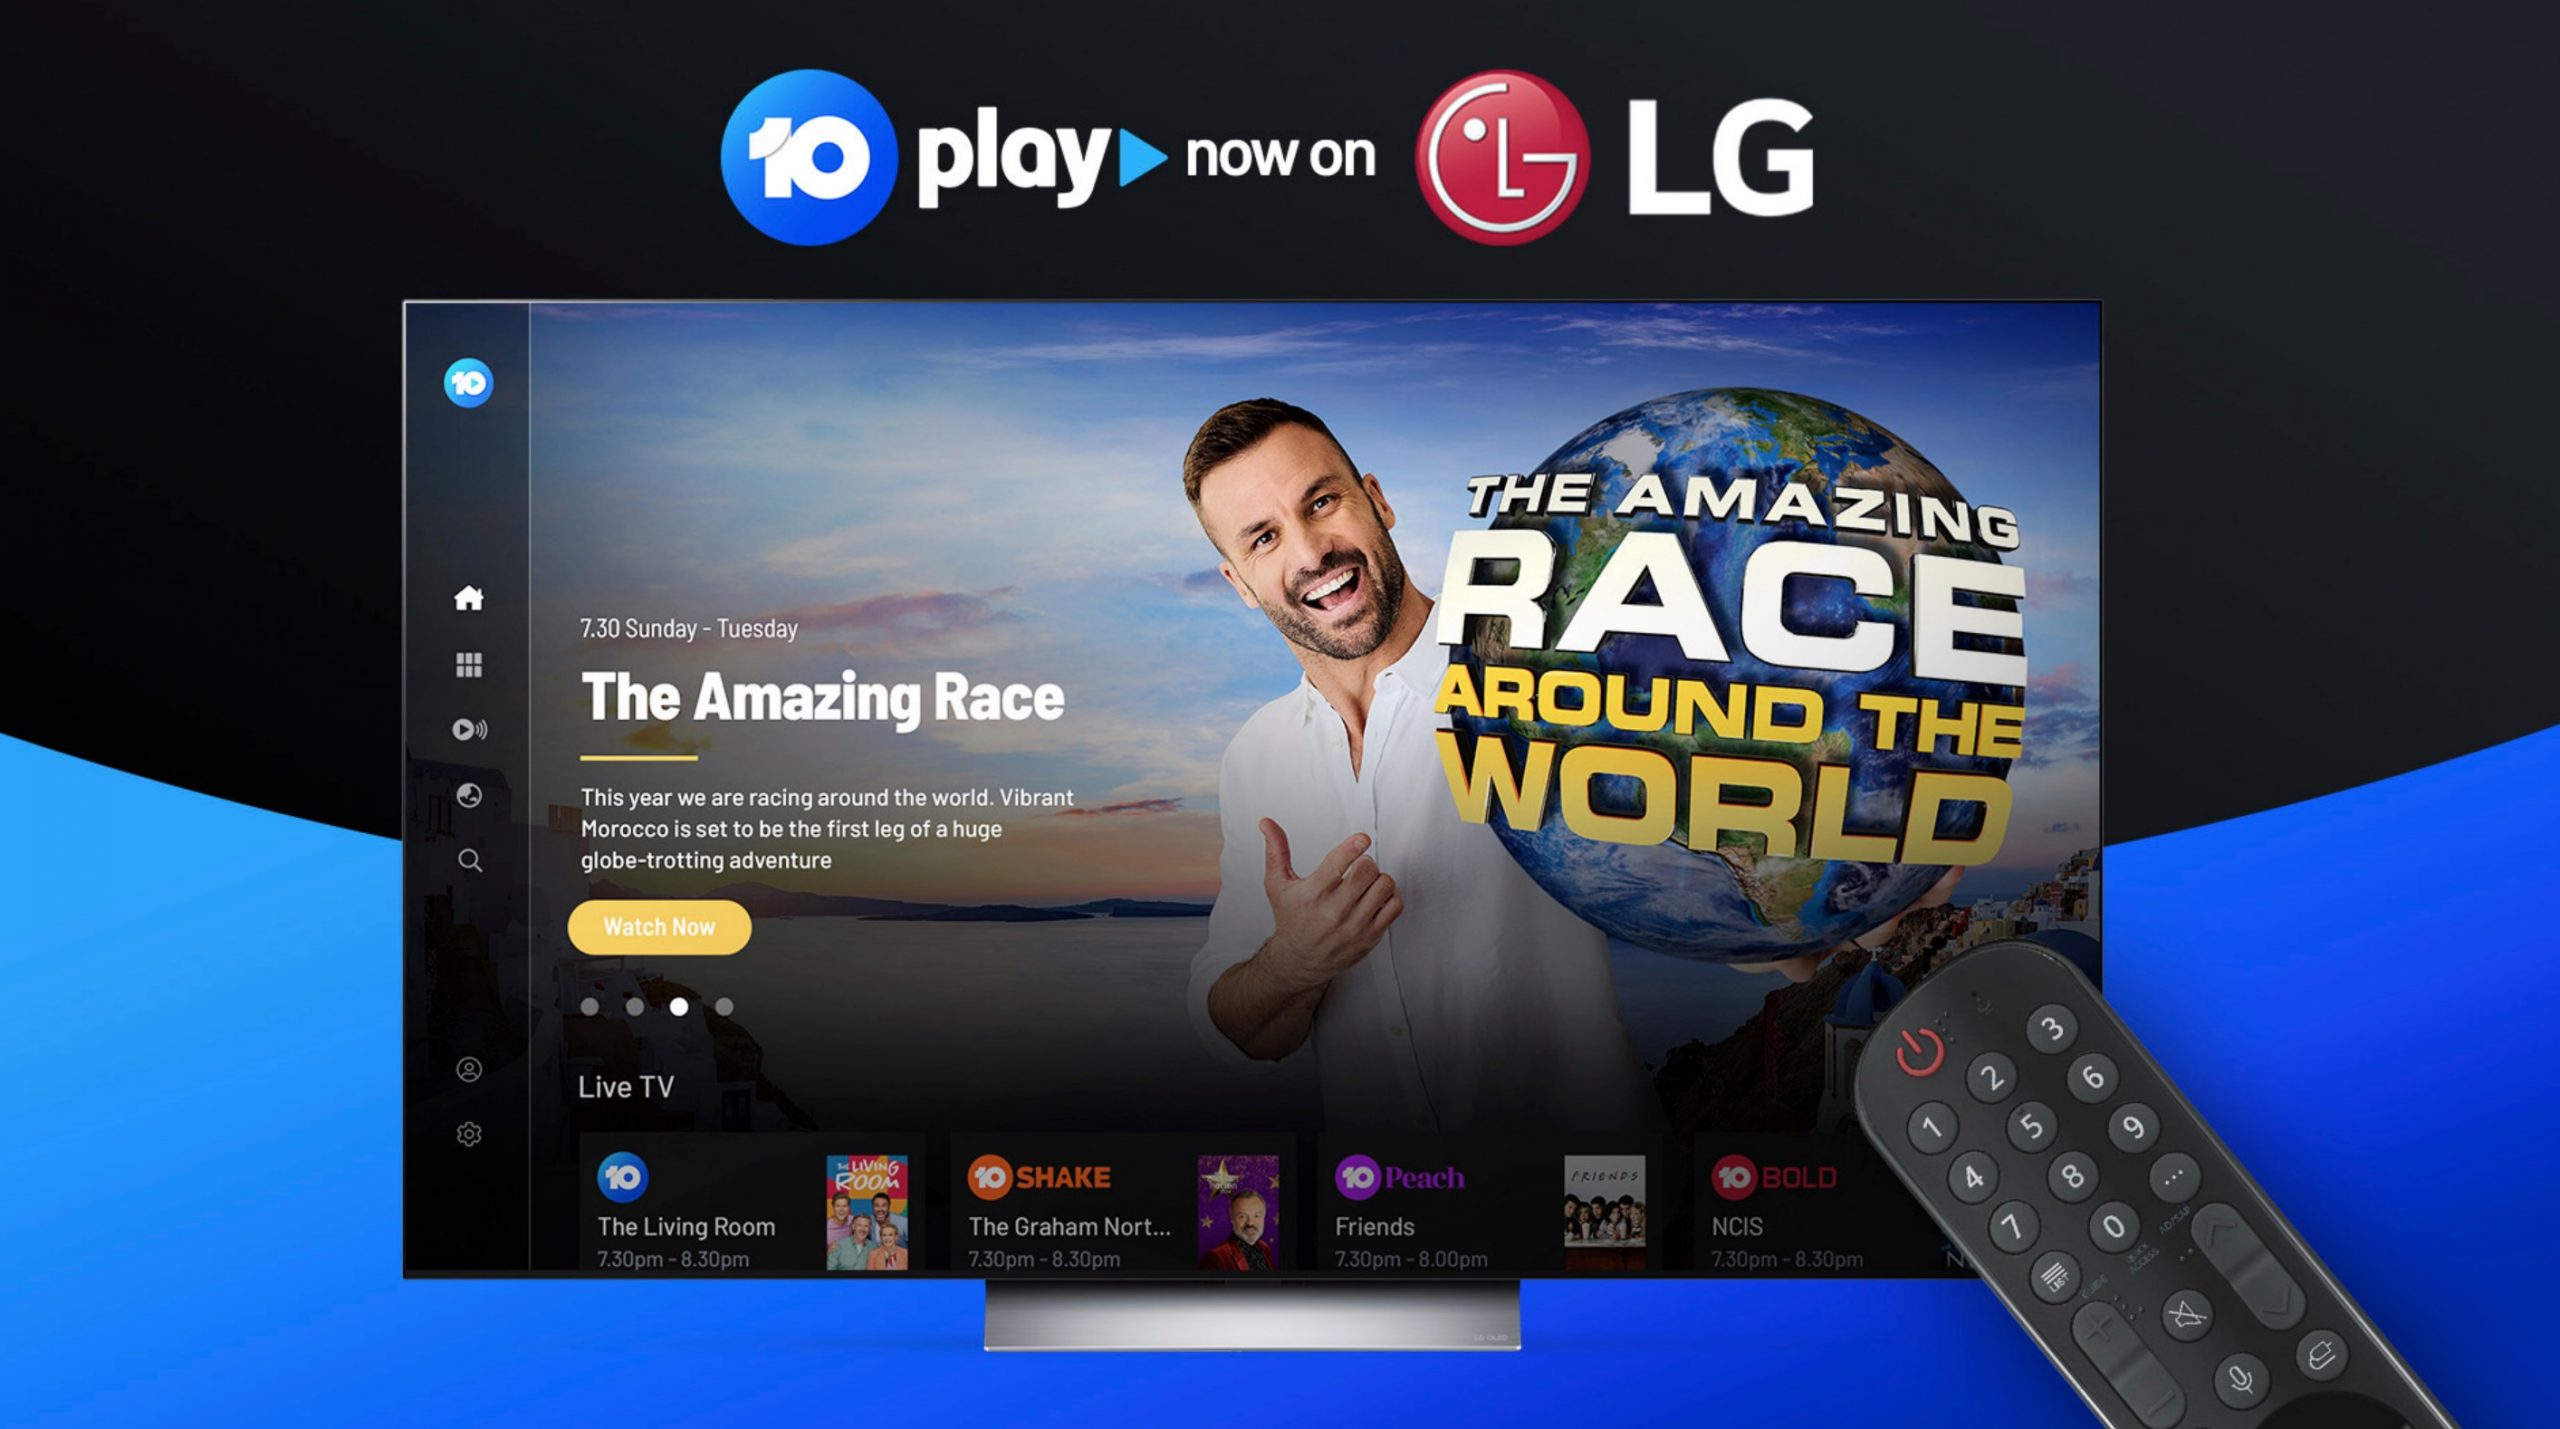 LG TVs now have 10 Play (AV)